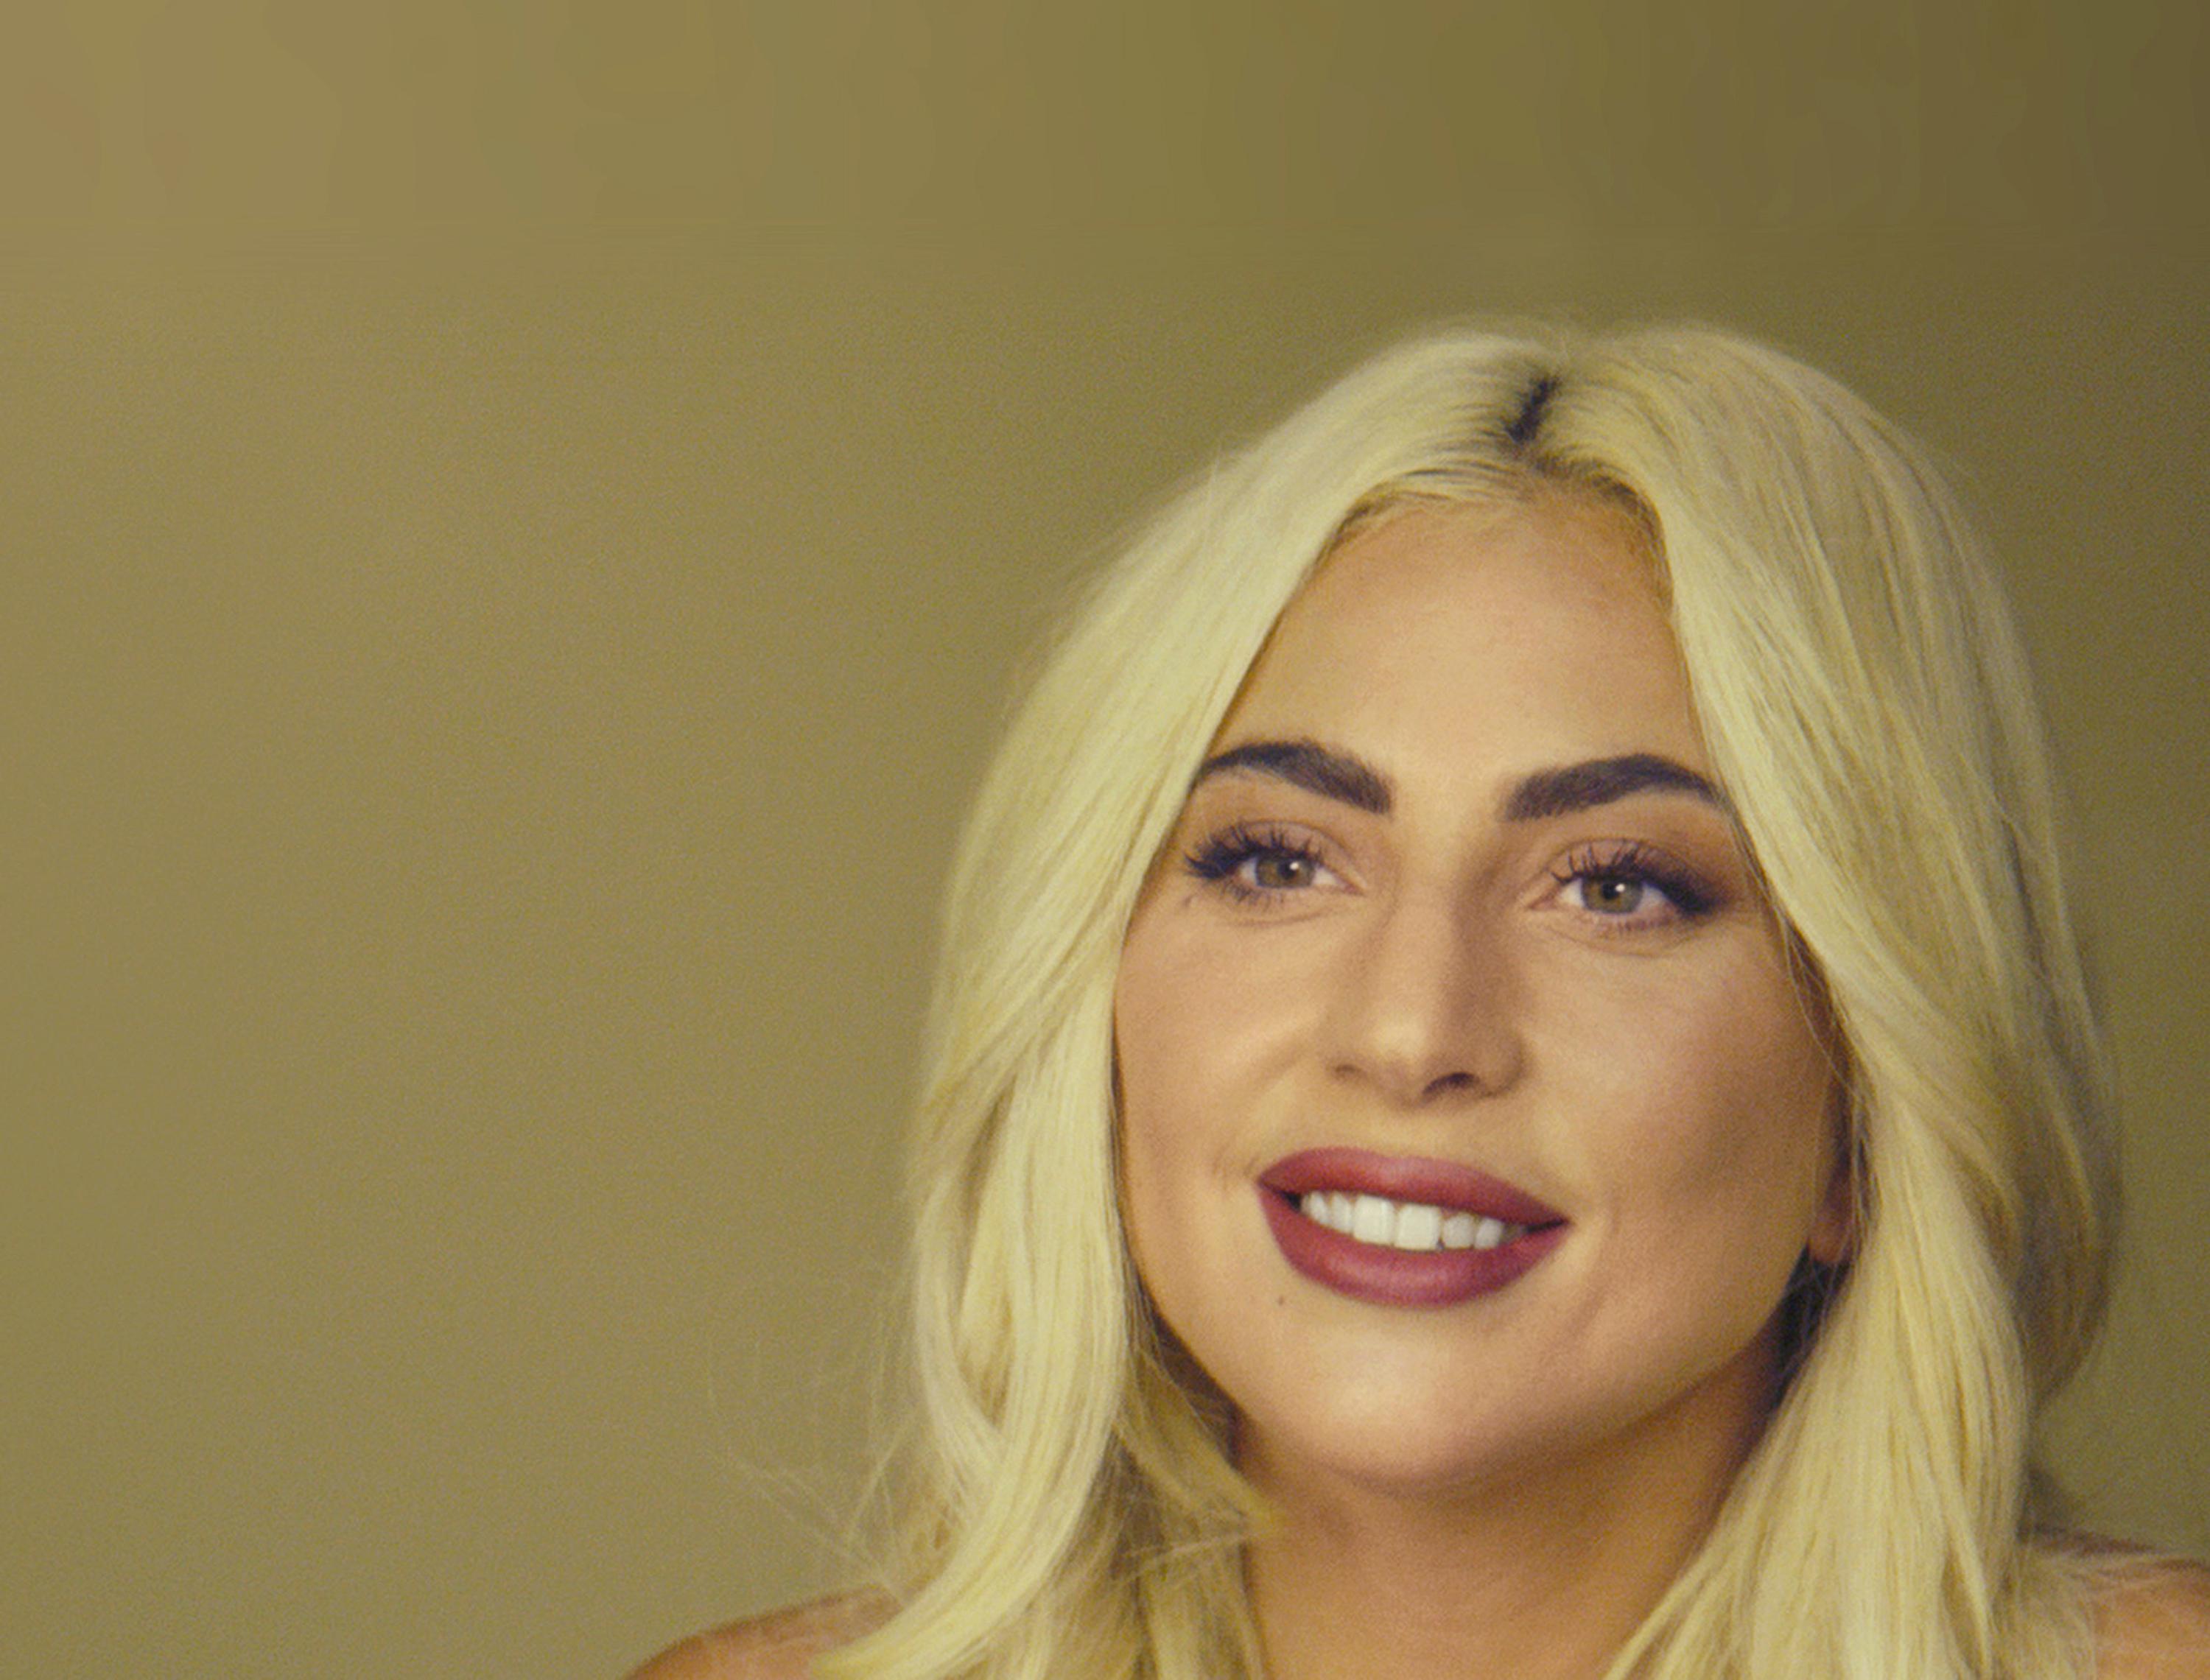 Lady Gaga Says Rape At 19 Led To A Total Psychotic Break